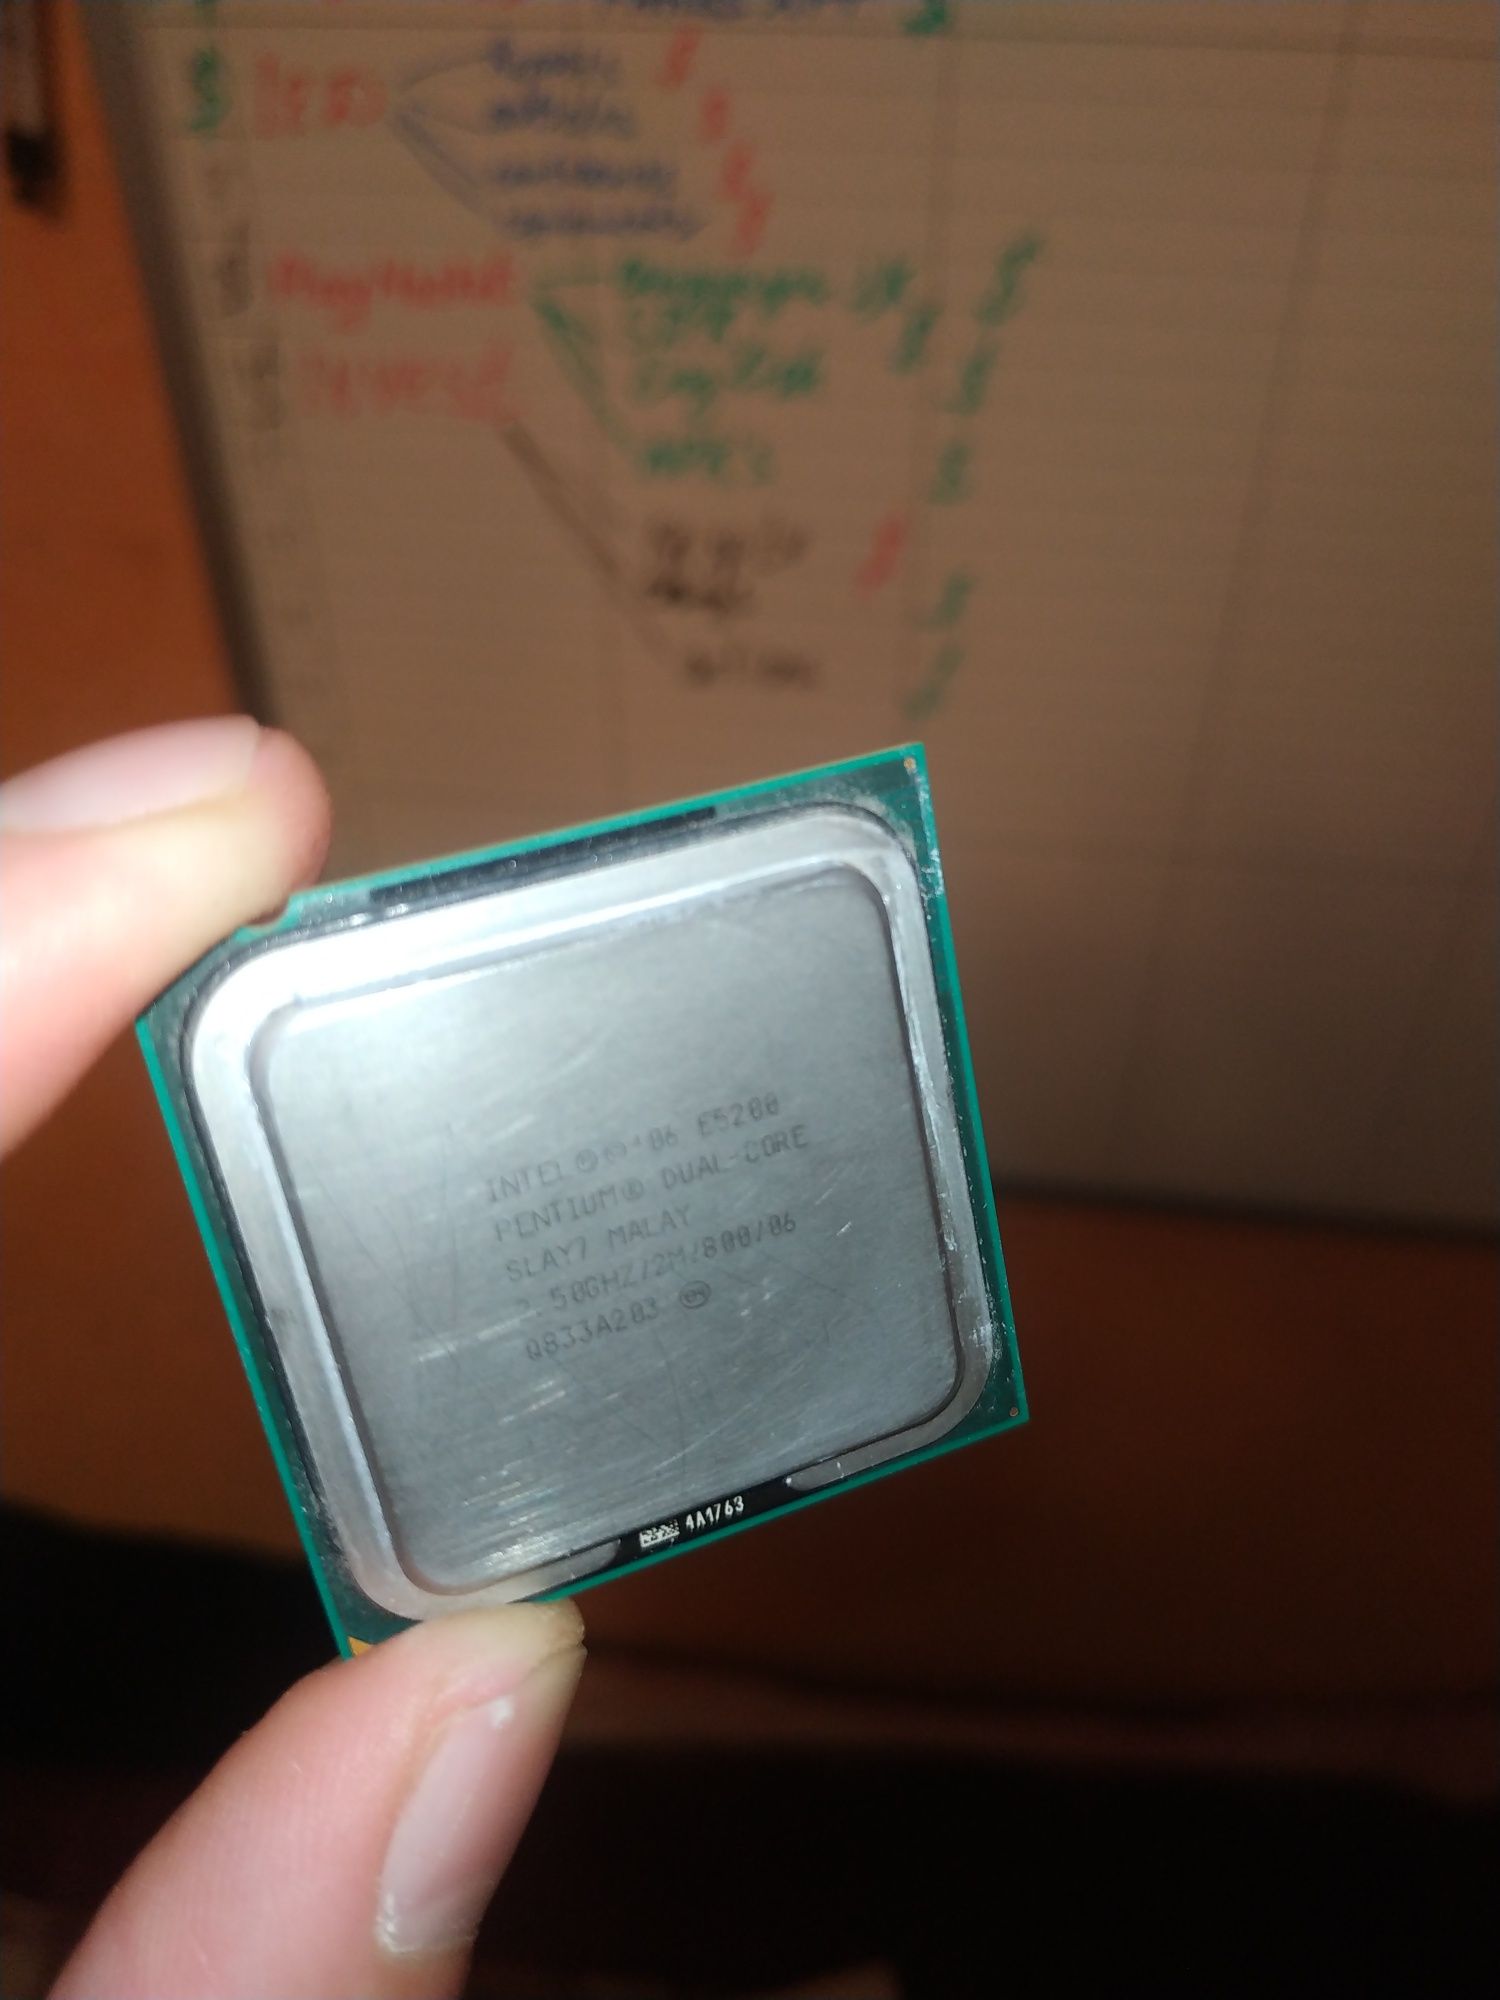 Intel Pentium E5200 Socket 775